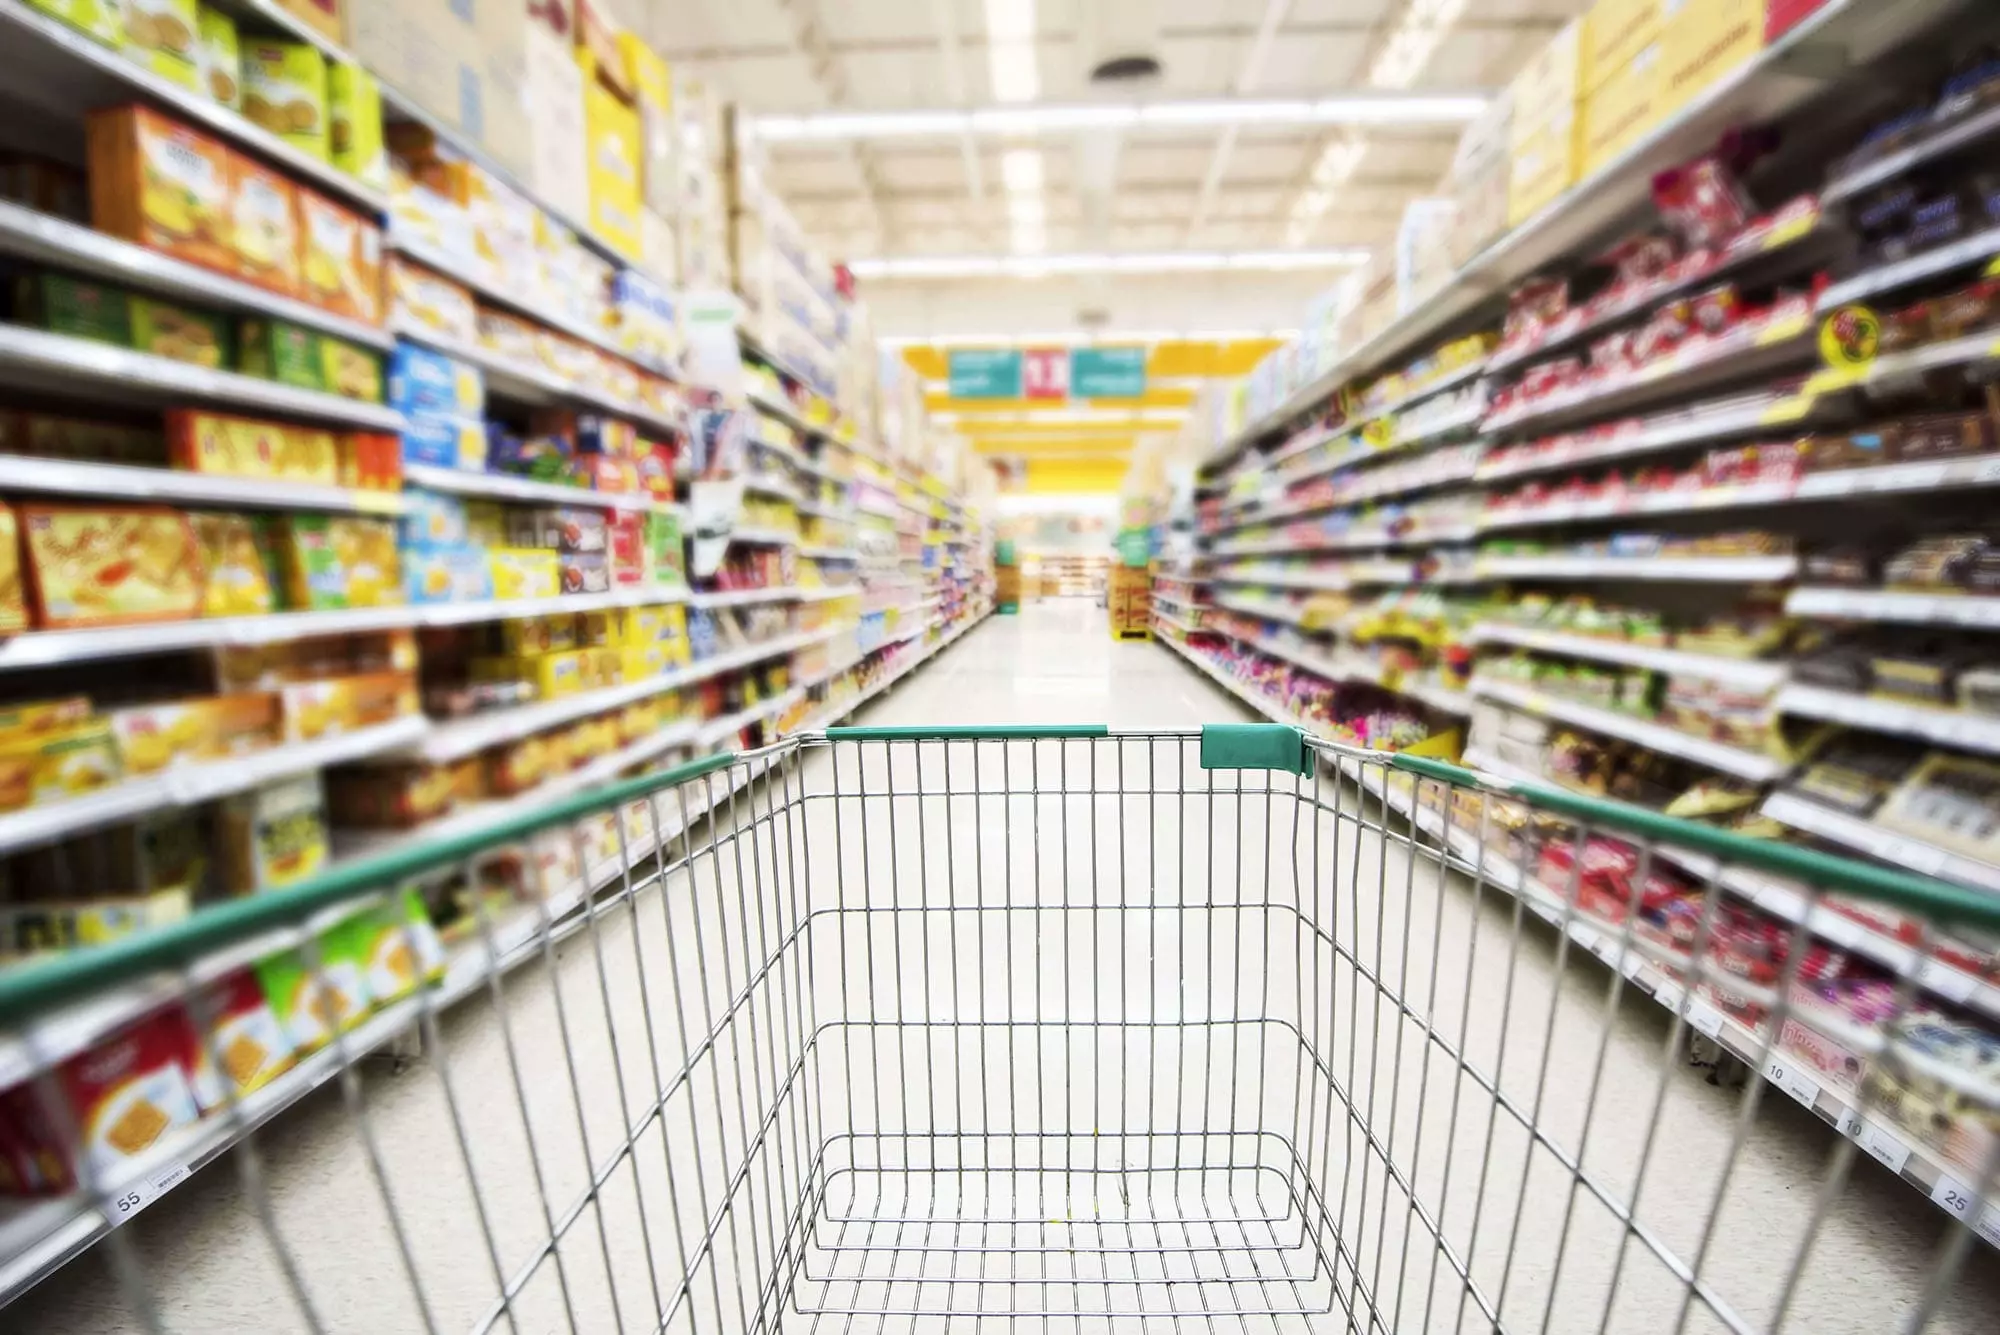 Customer Journey Analysis in Supermarket